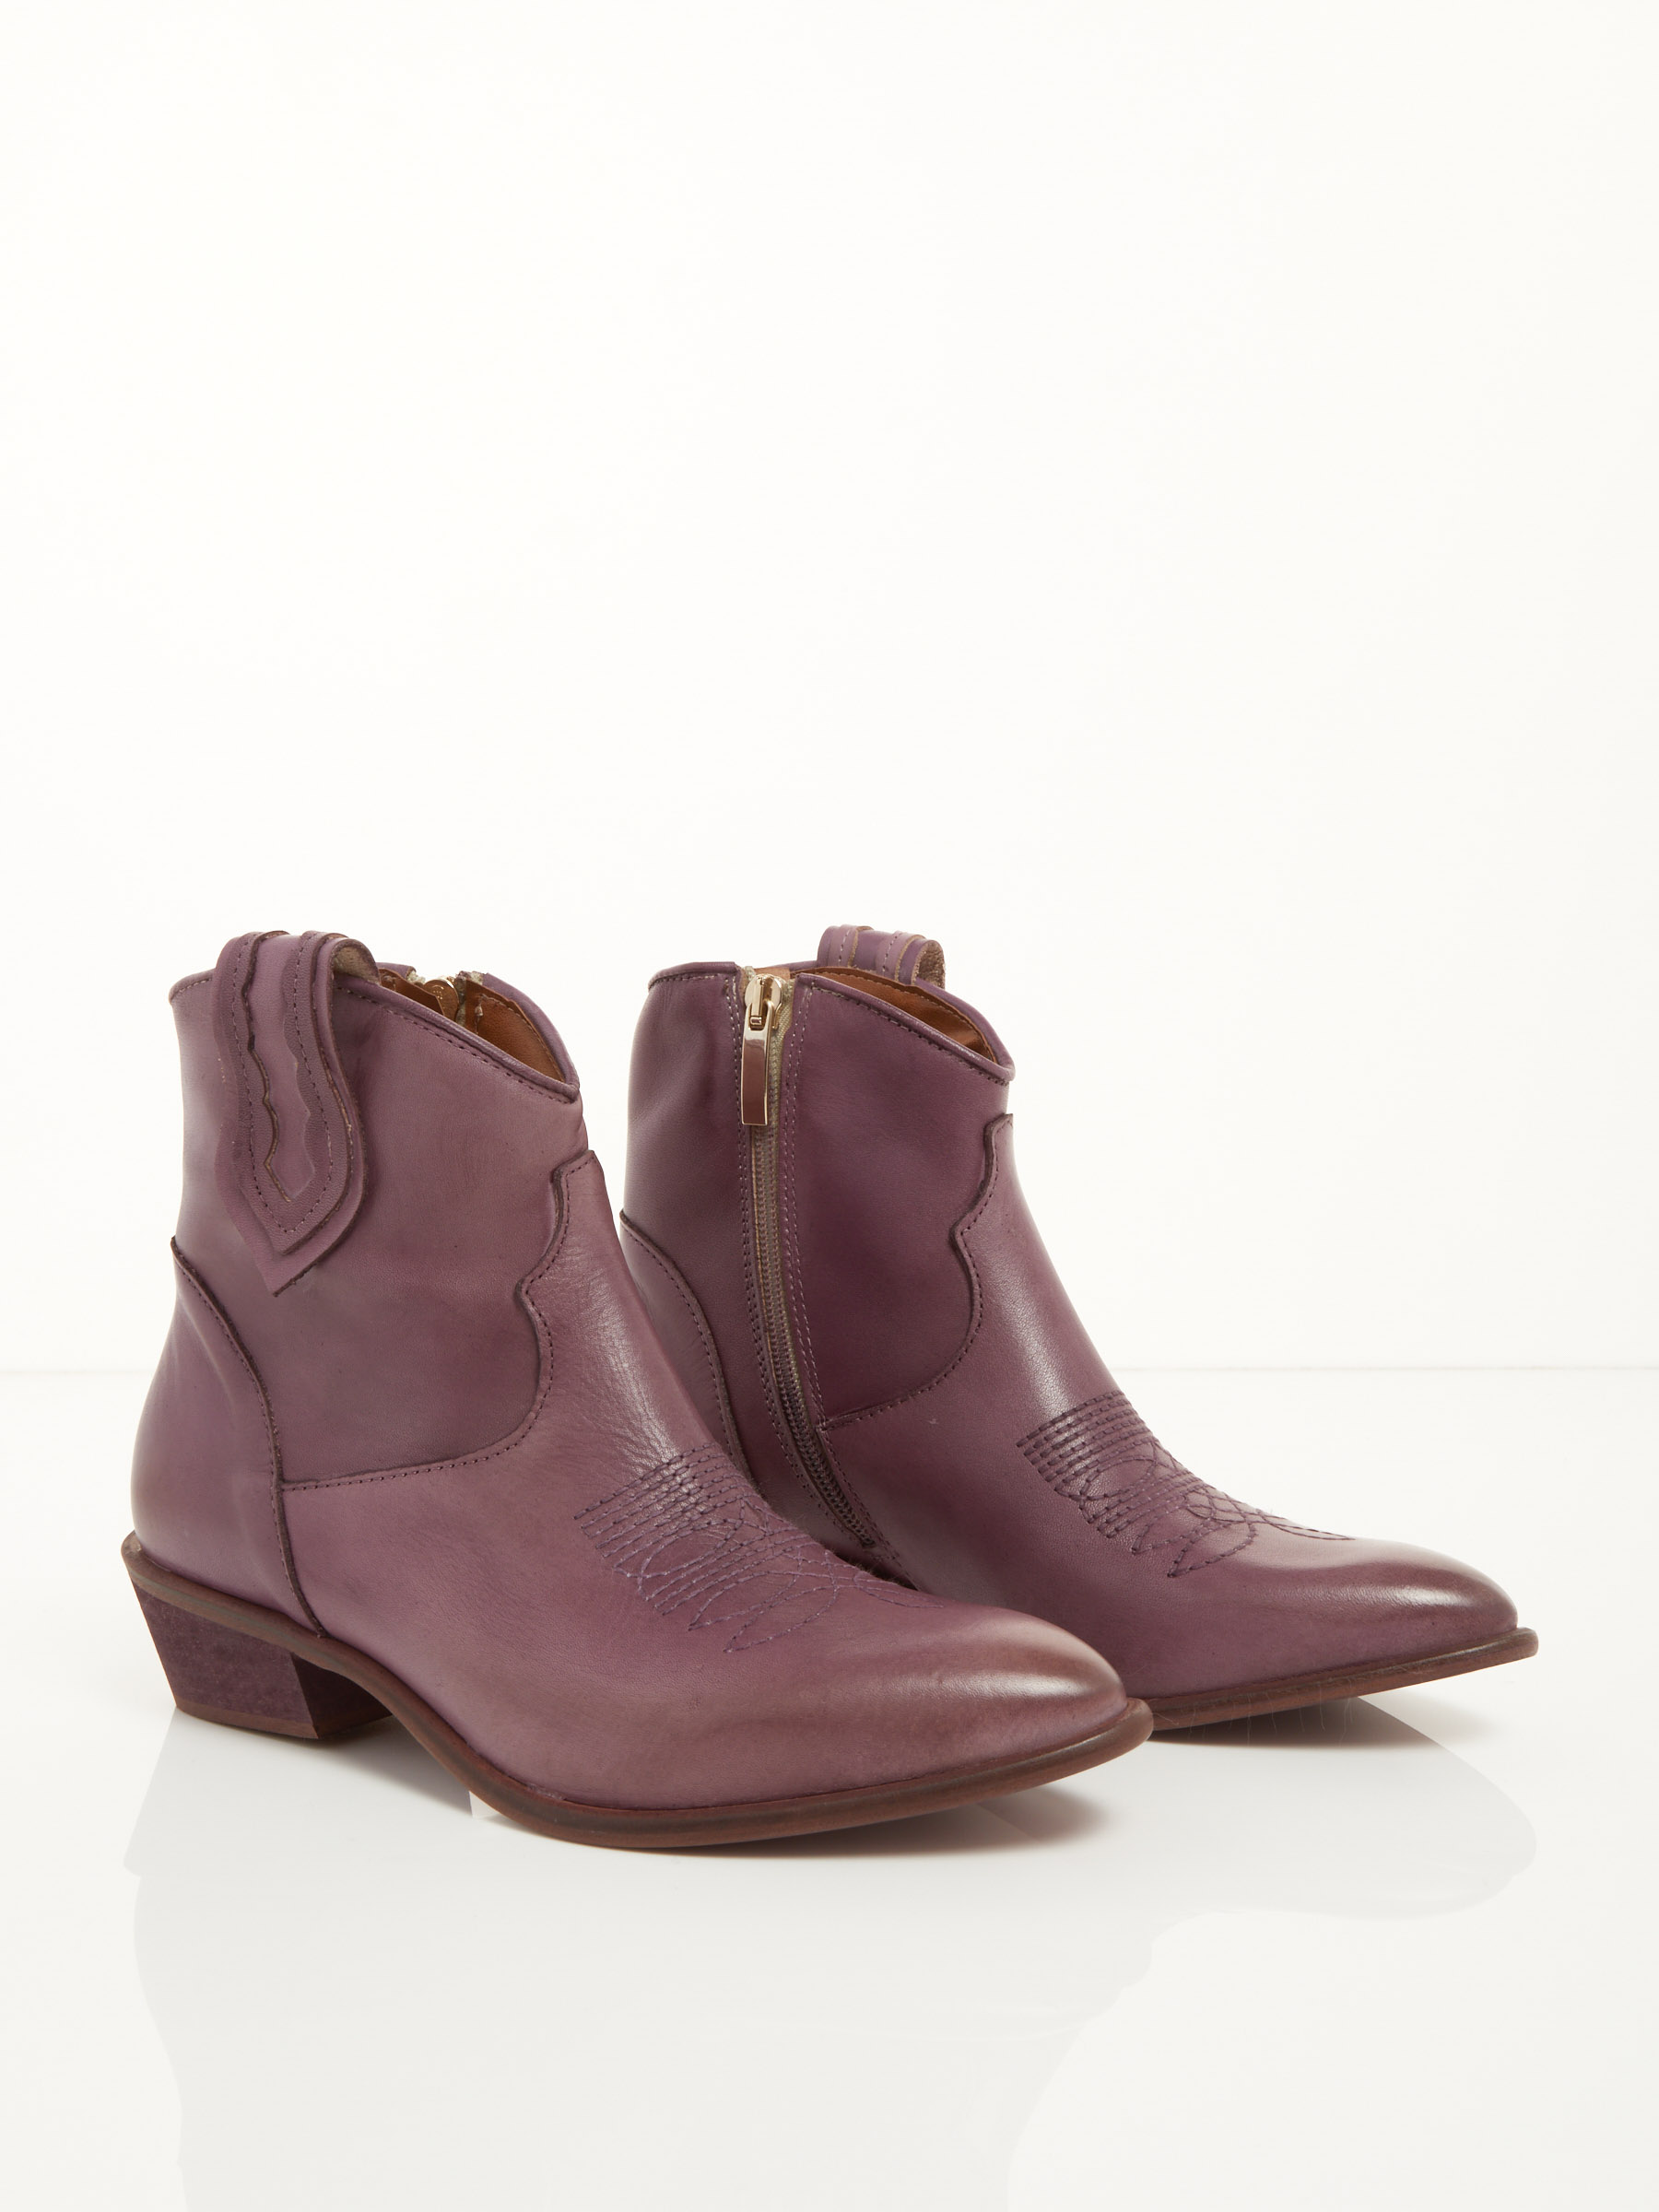 Vendita Leather Cowboy Ankle Boots F0545554-0499 Sito Ufficiale